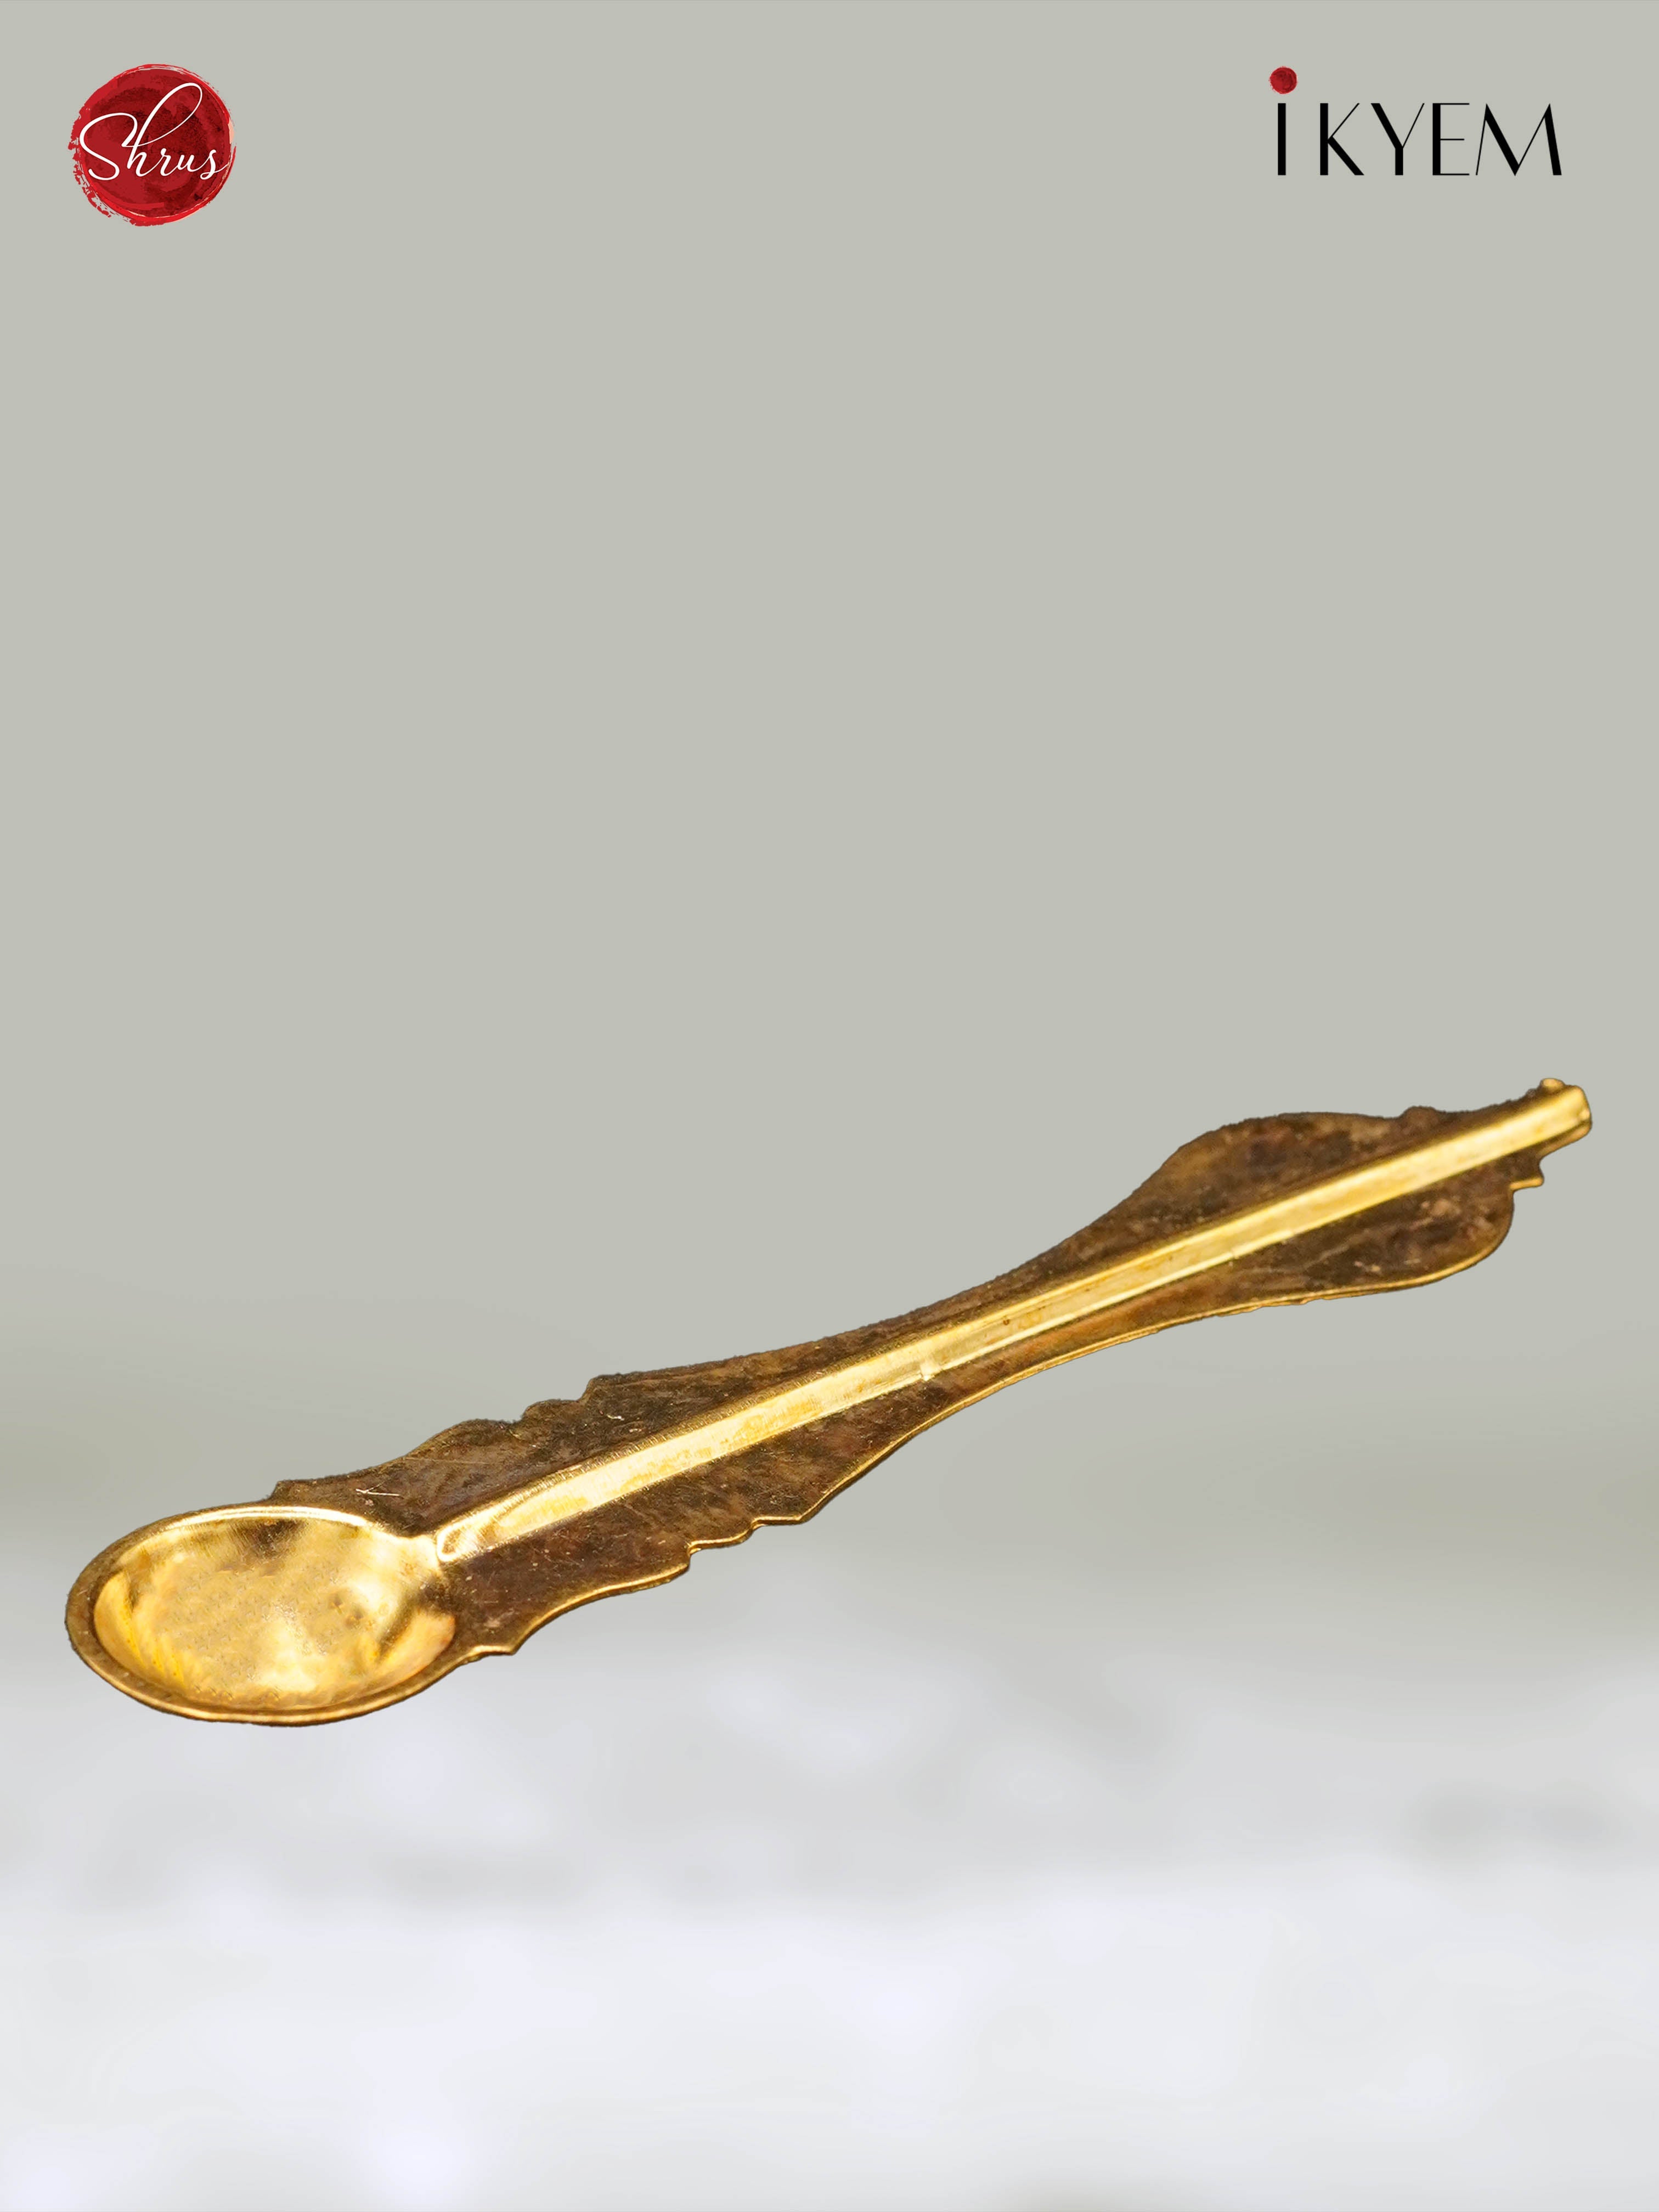 Panchpatra (Spoon)